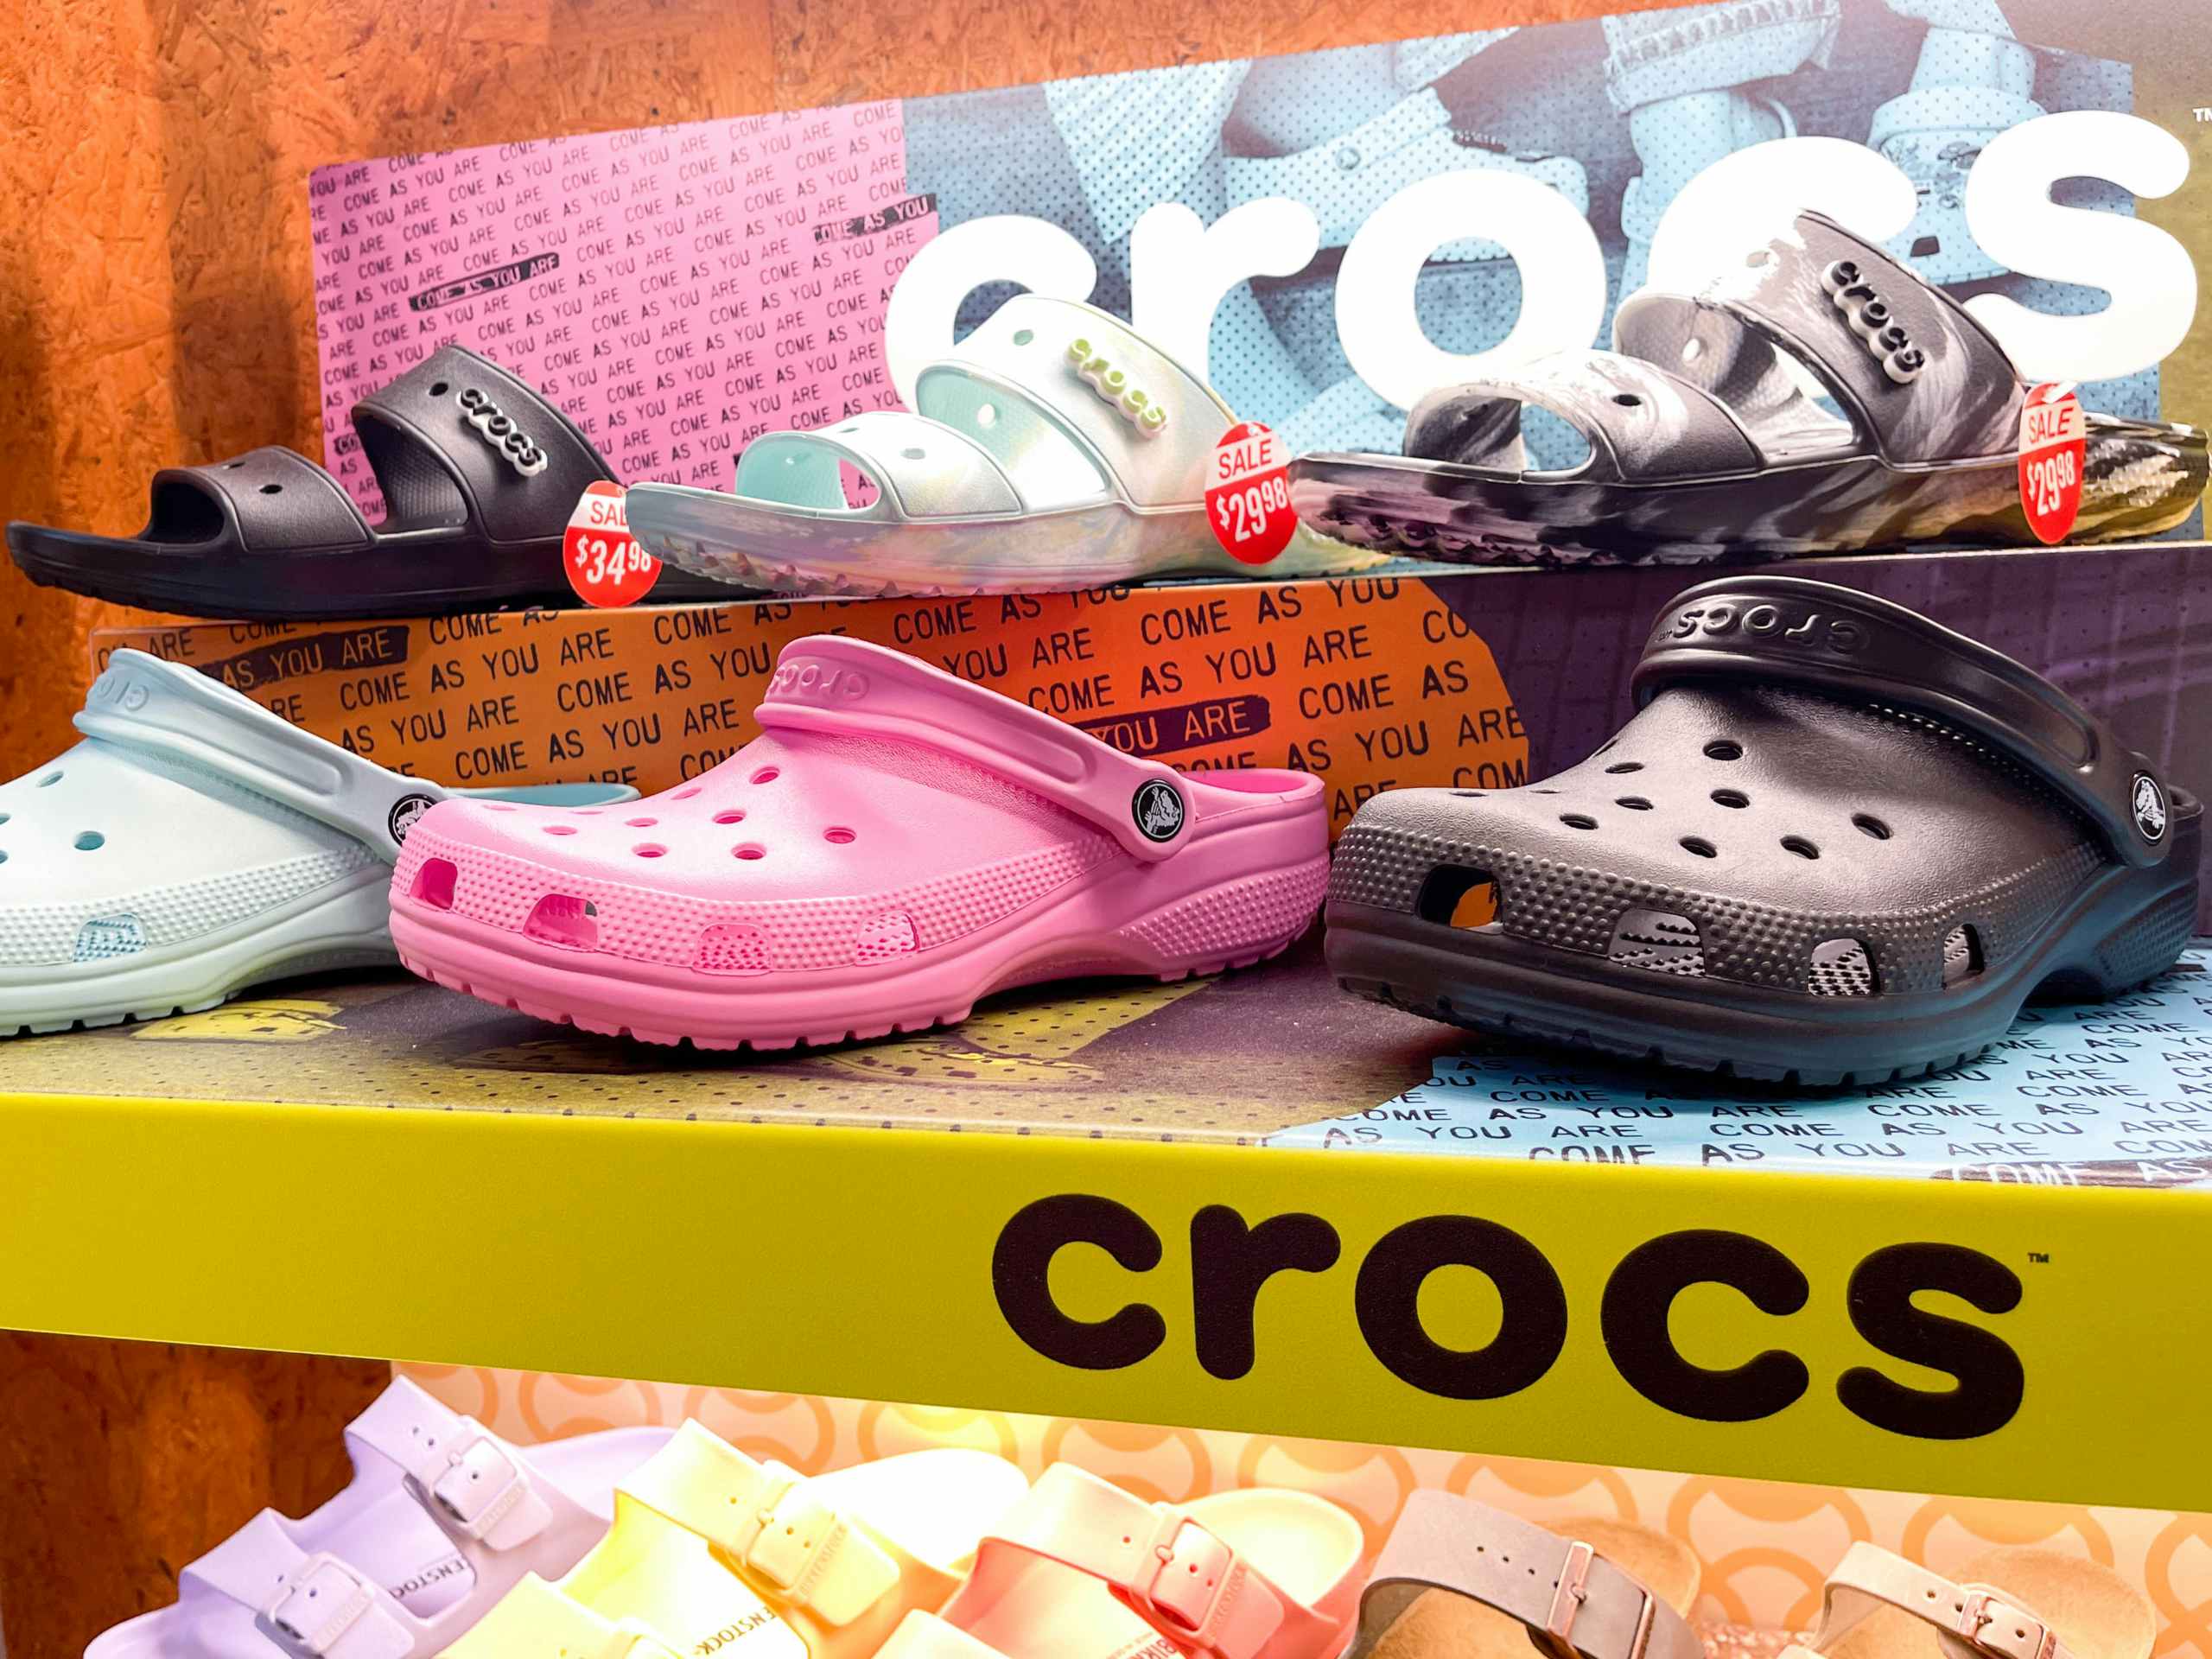 Massive Crocs Shoes Sale: $24 Sandals and More